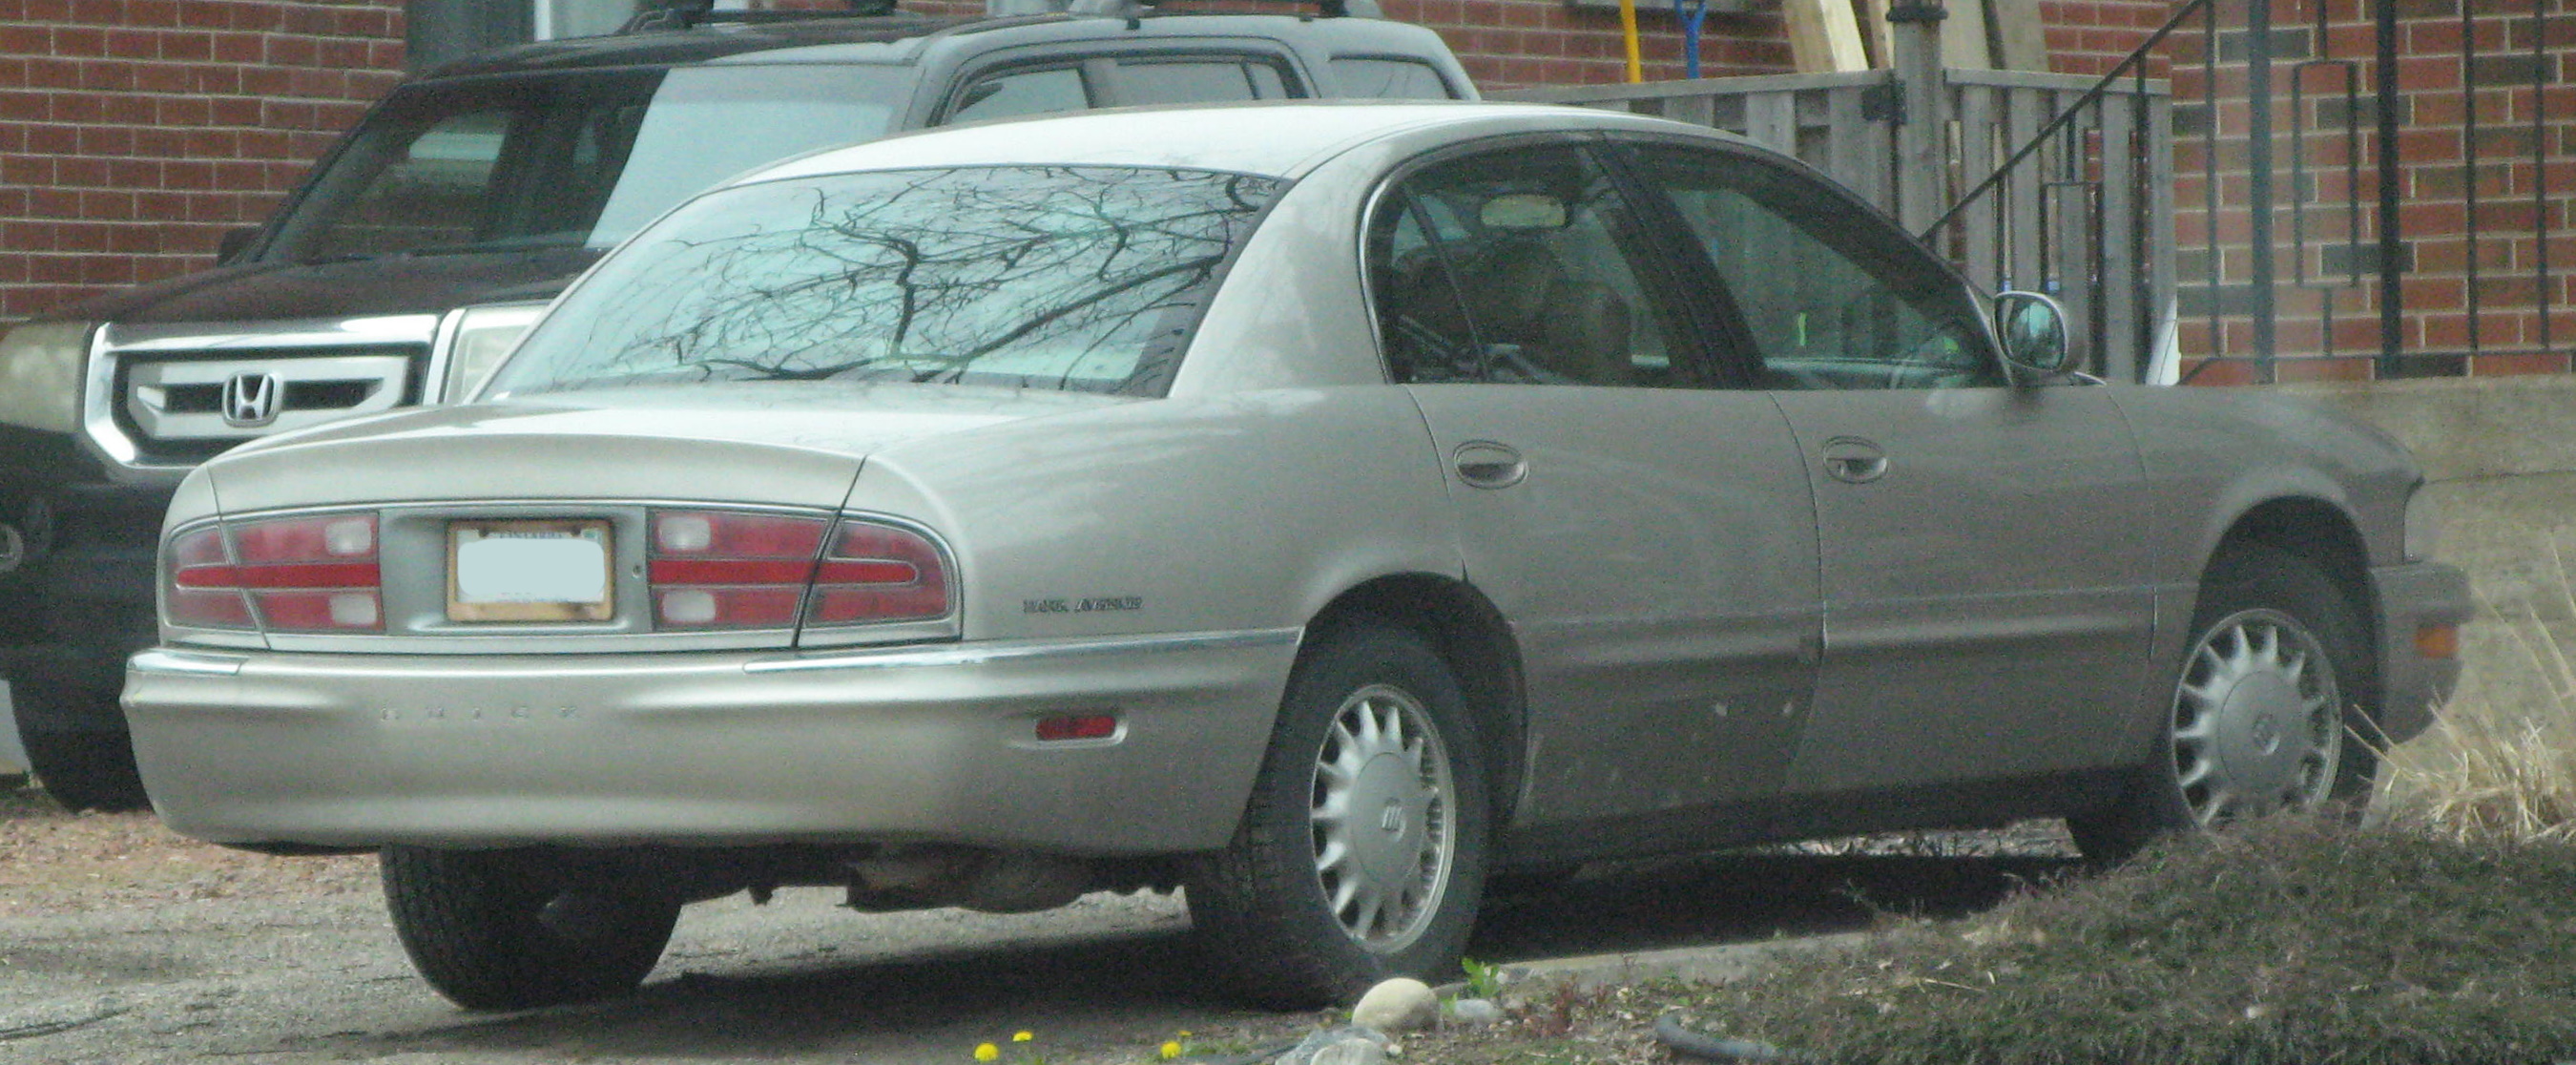 File:1998 Buick Park Avenue, Rear Right, 05-18-2020.jpg - Wikimedia Commons